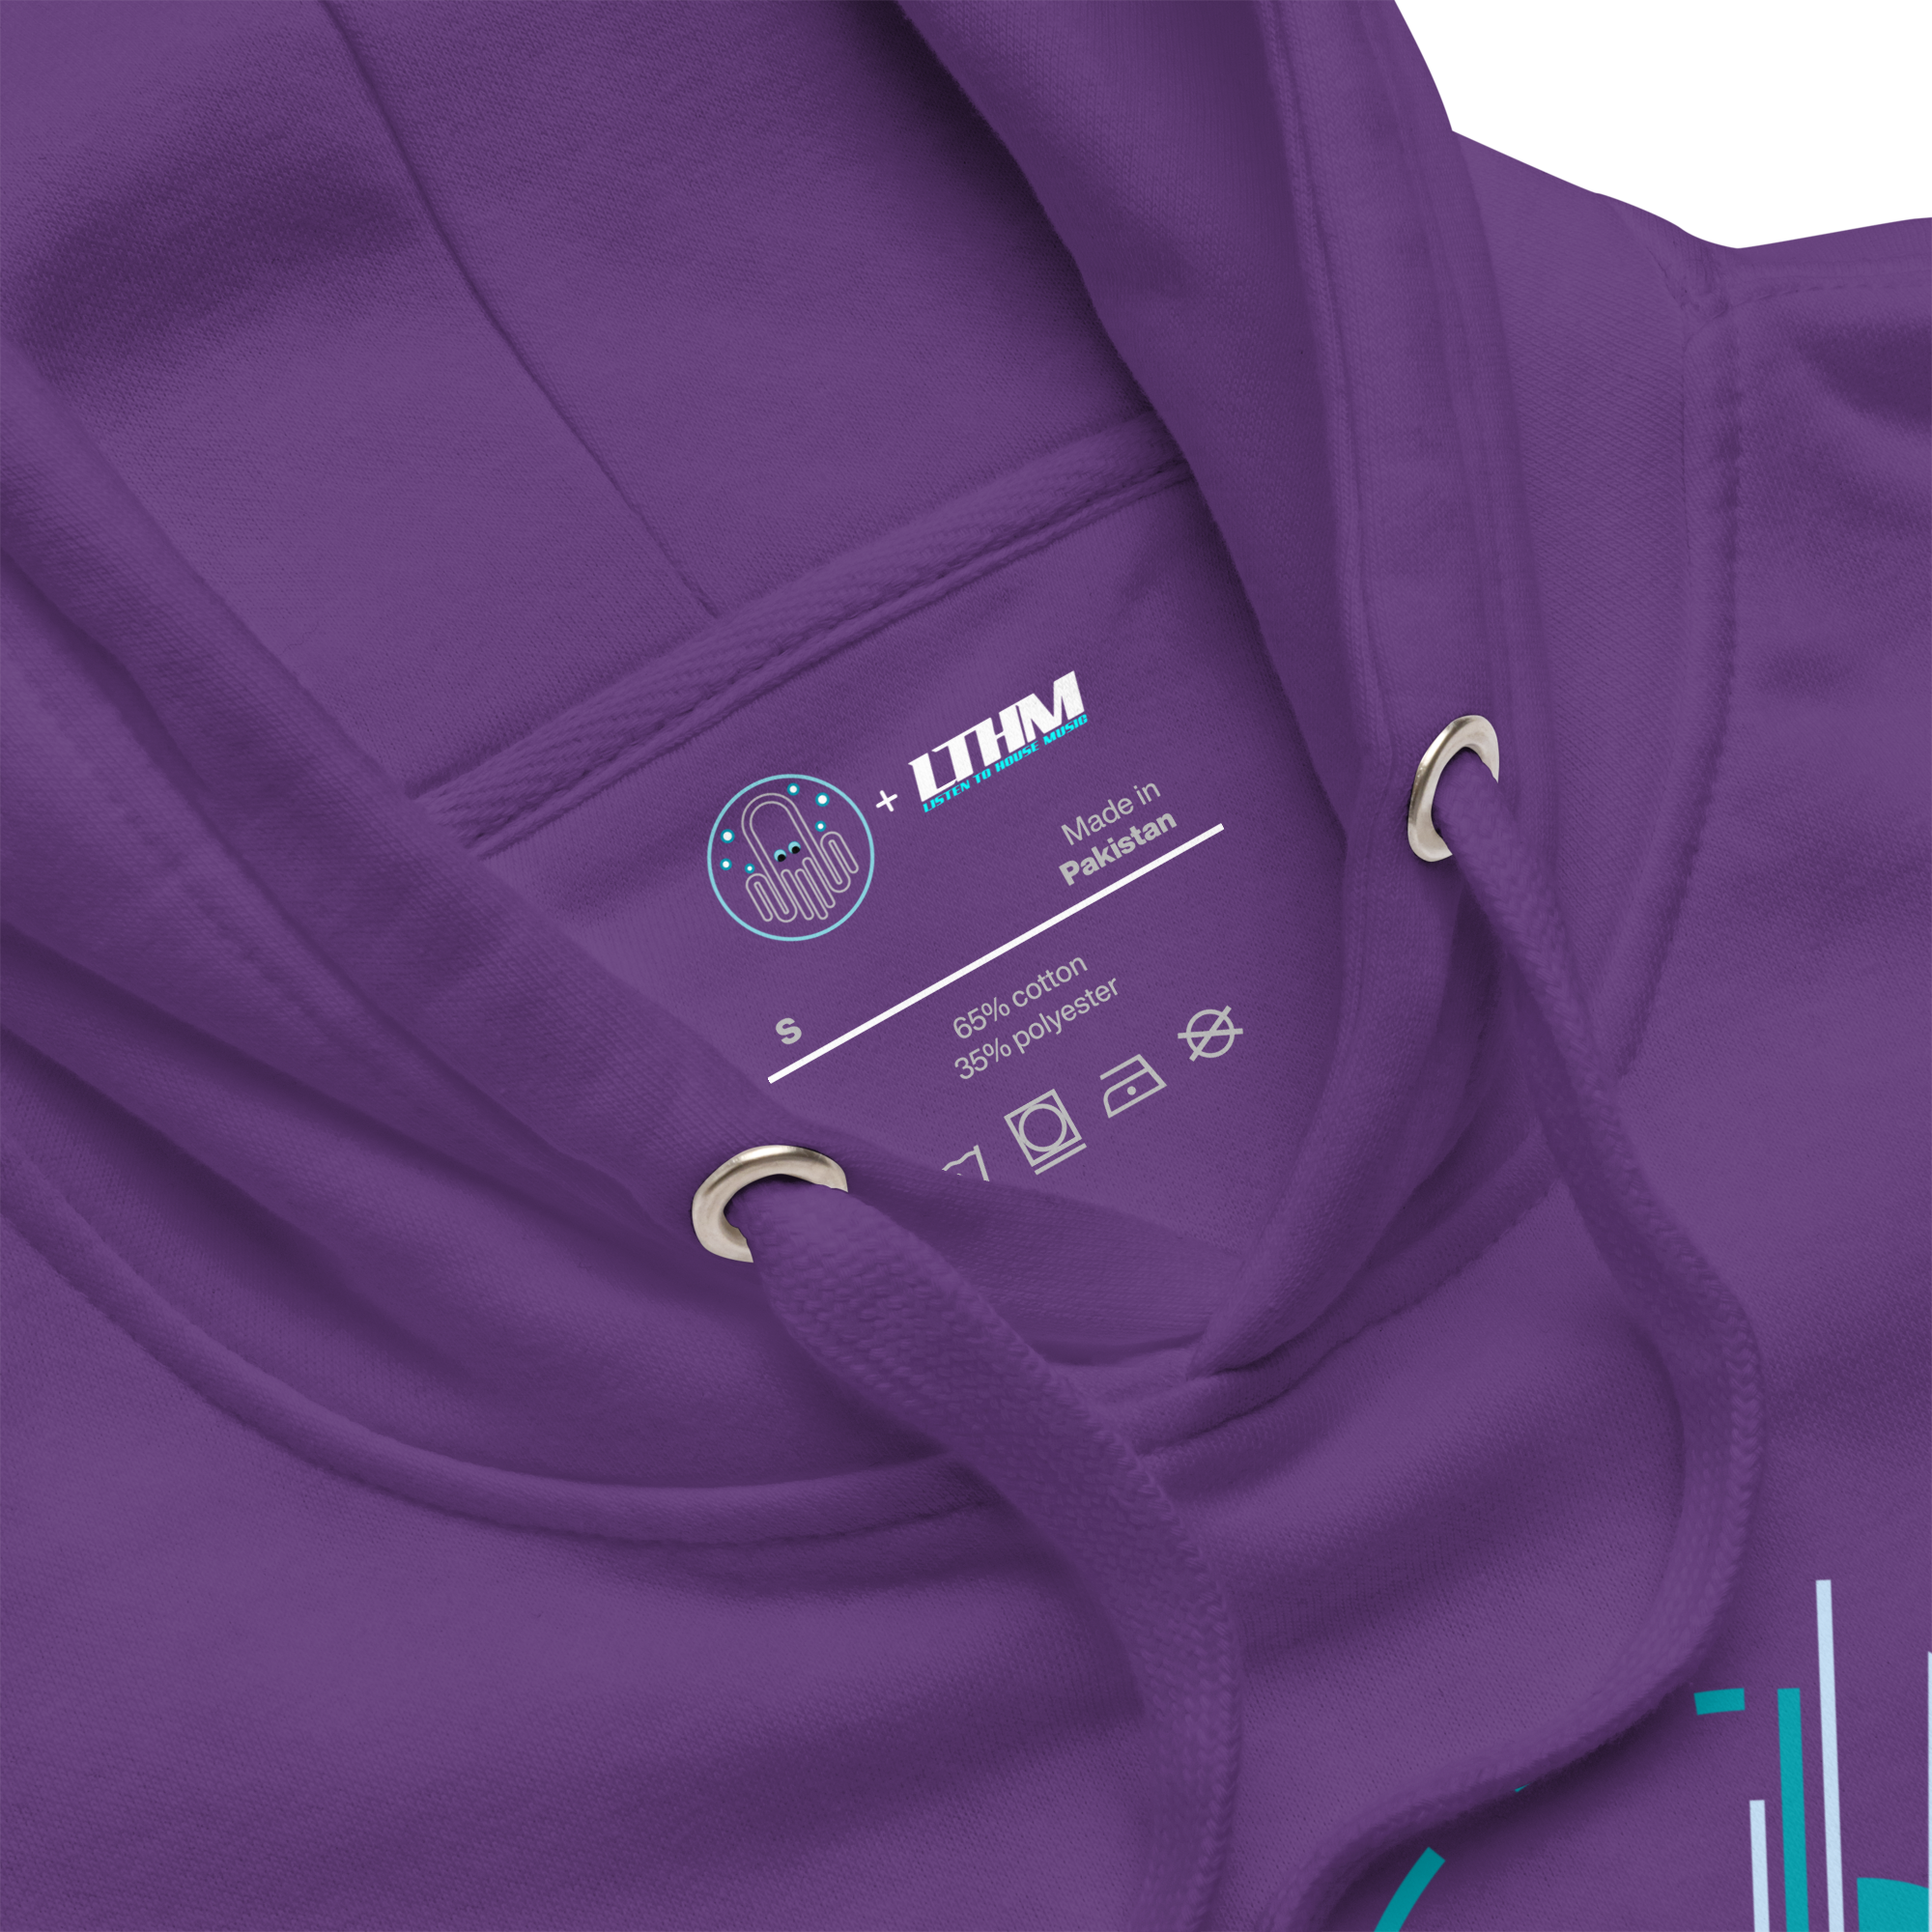 Purple Rheah & Lofny Graphic Hoodie Zoomed View of Hood and Inside Label